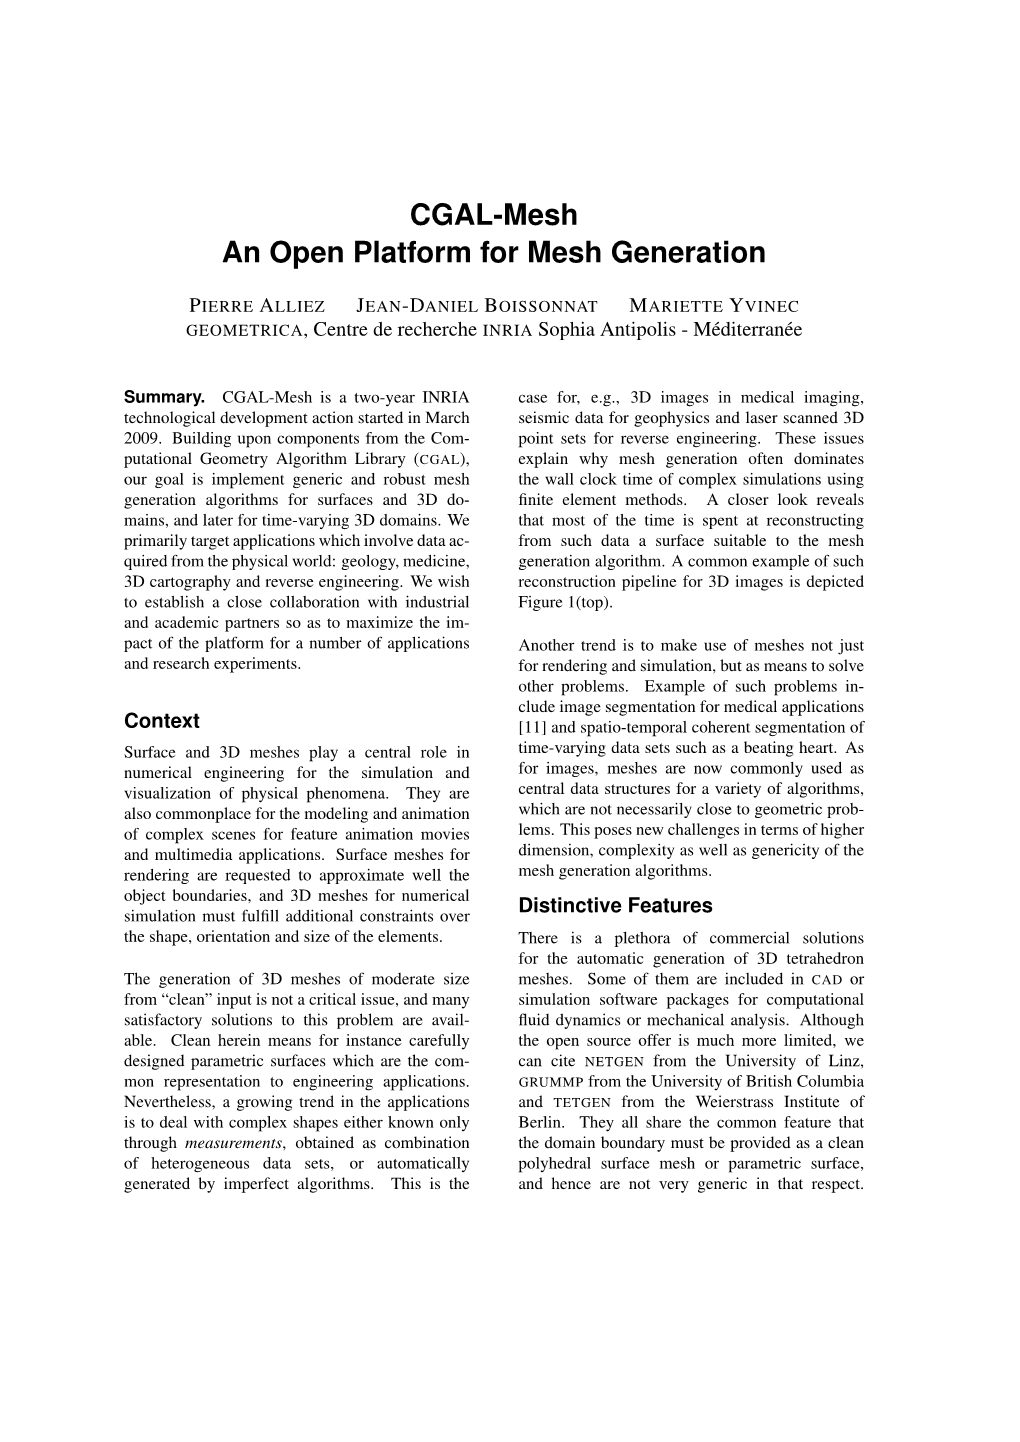 CGAL-Mesh an Open Platform for Mesh Generation